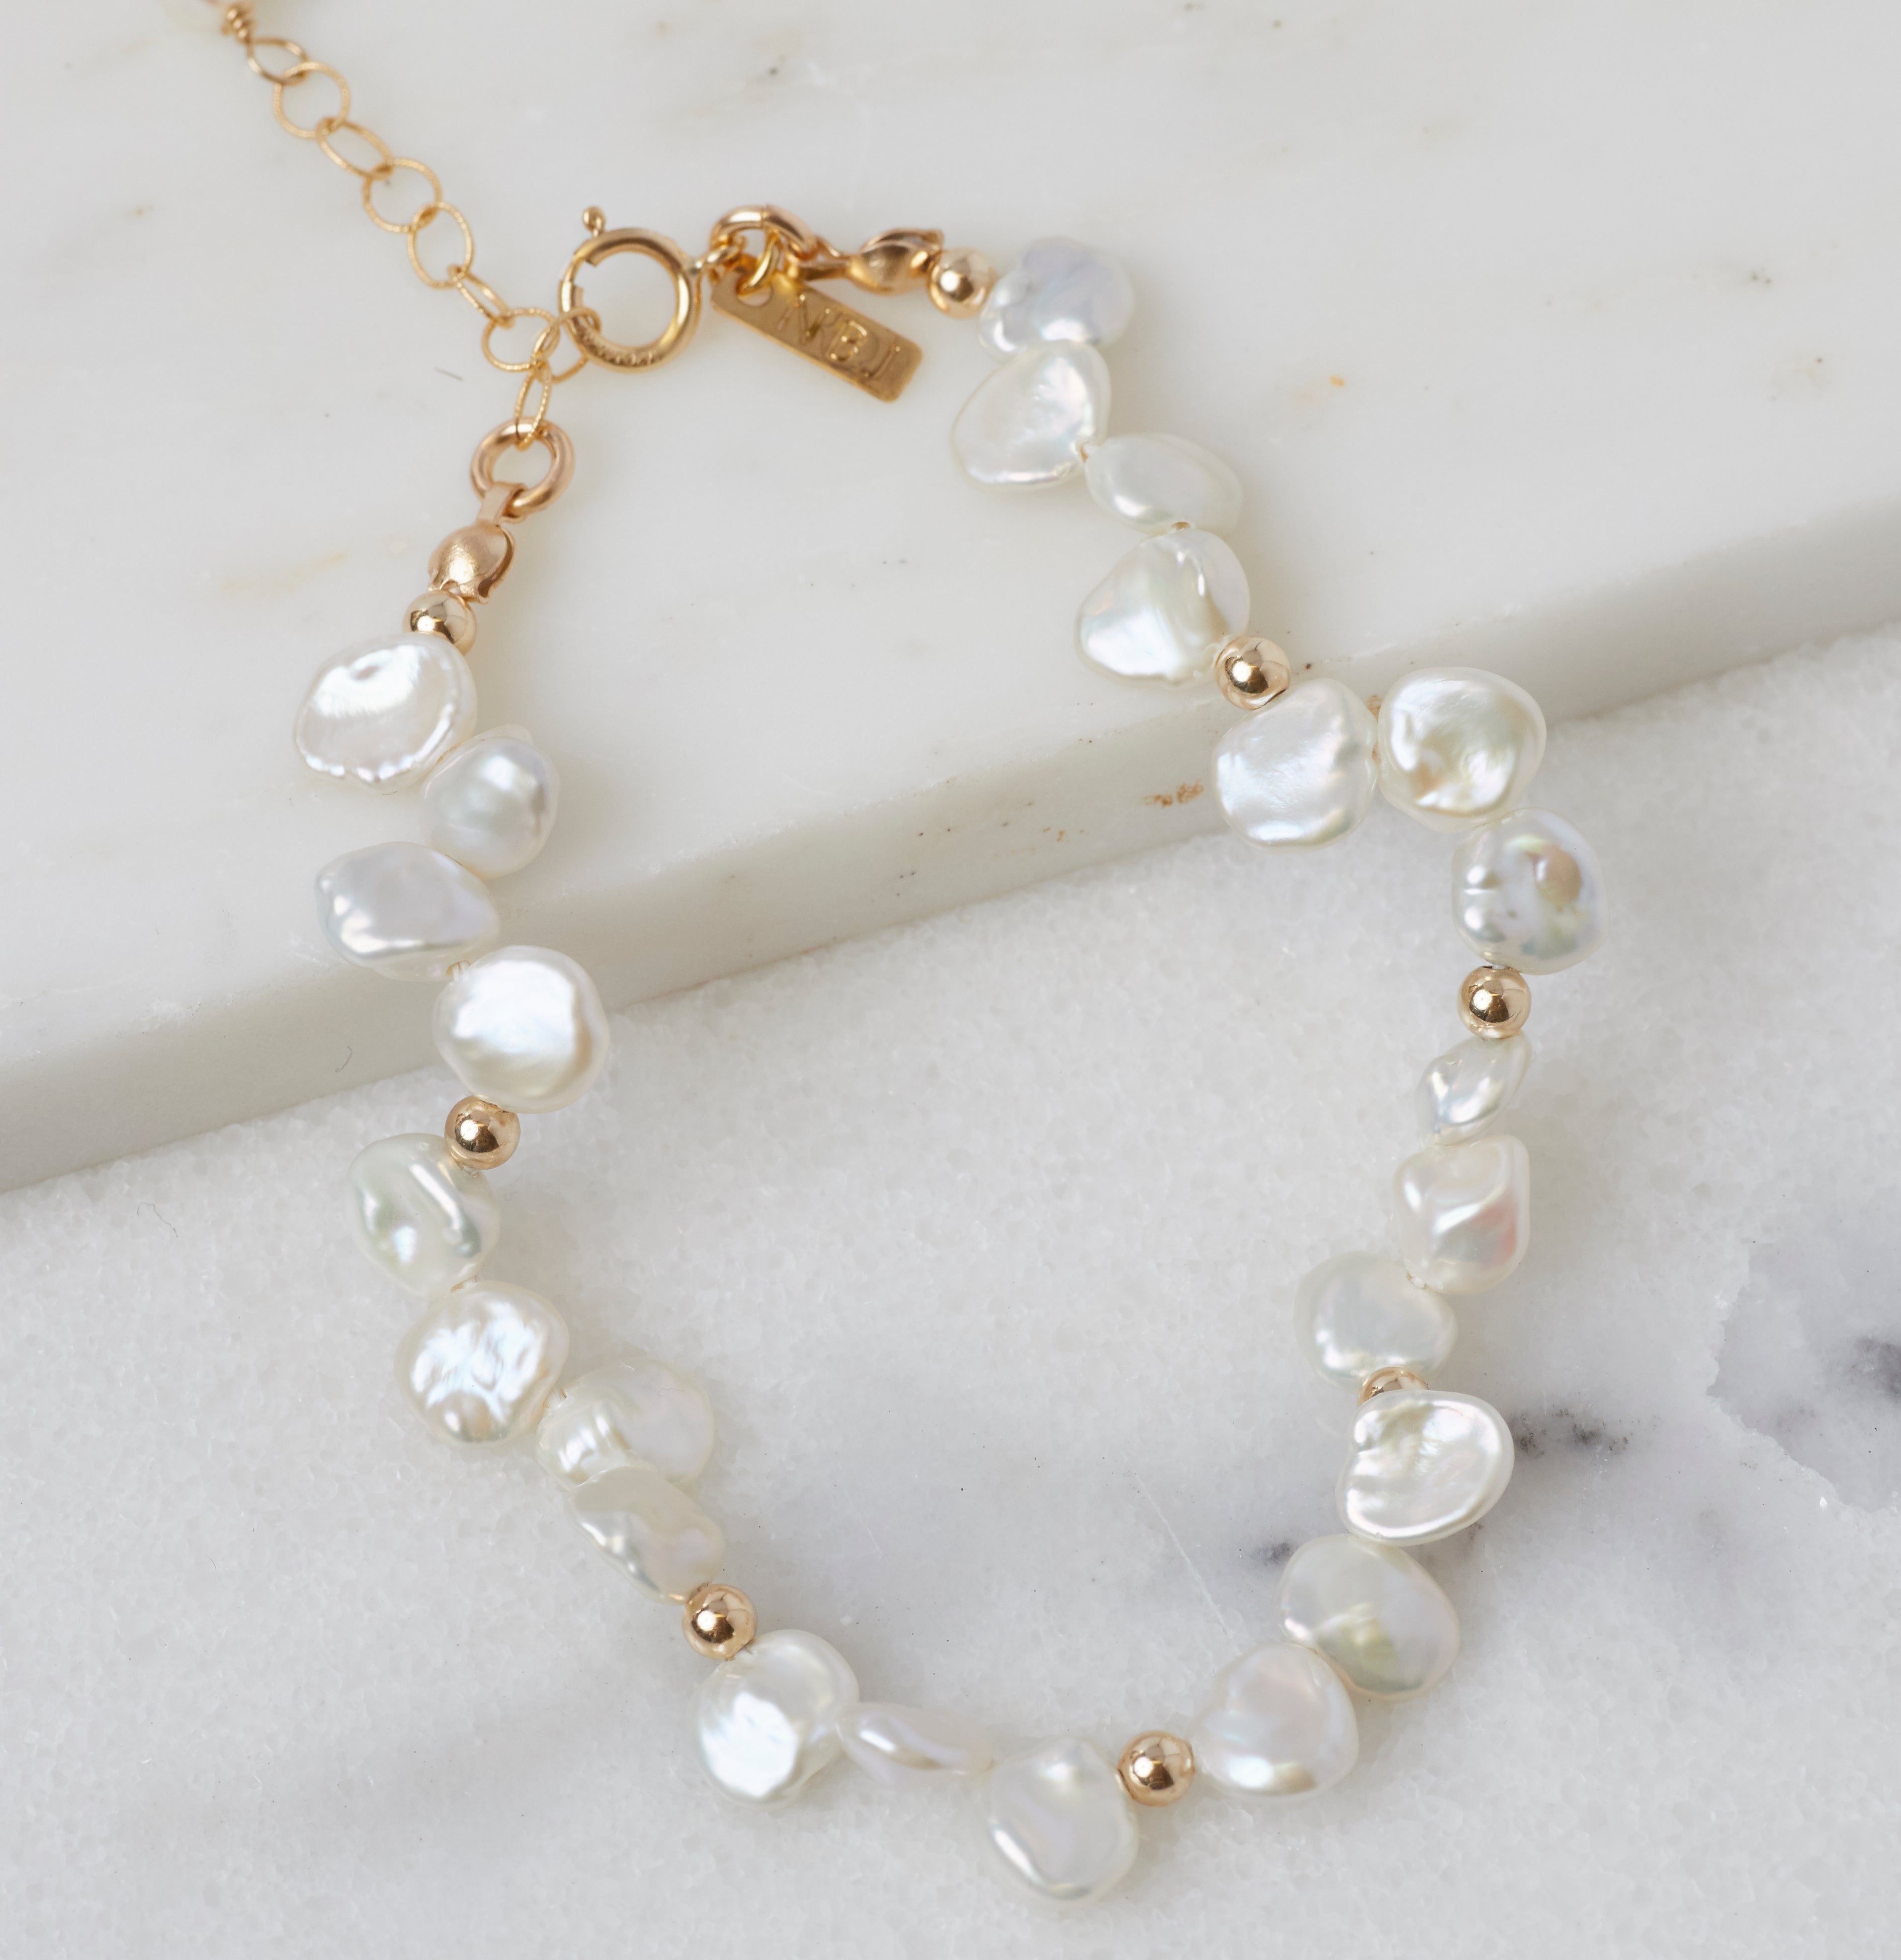 Le Perla – Natalie B. Jewelry